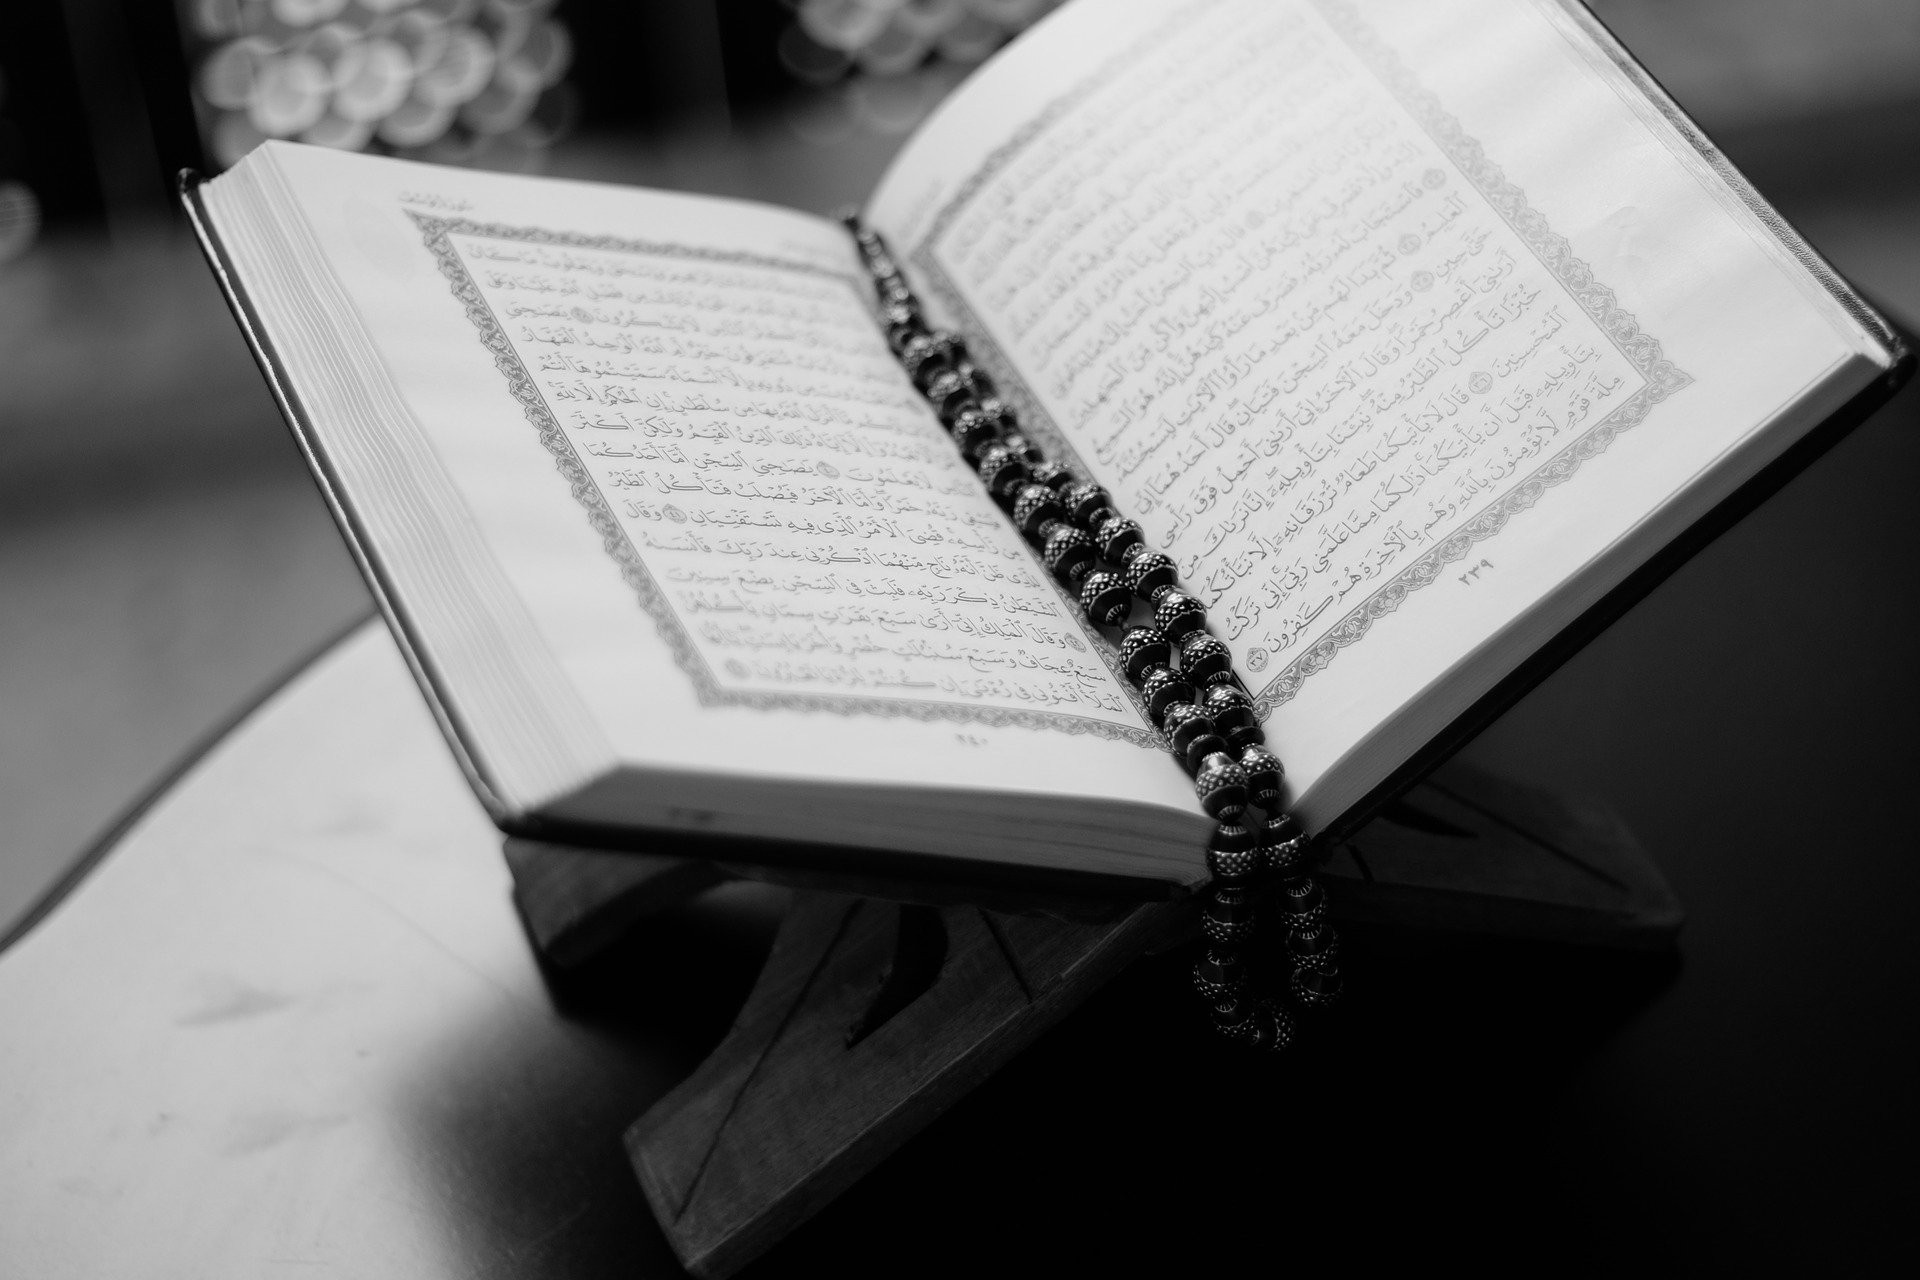 The amazing Quran